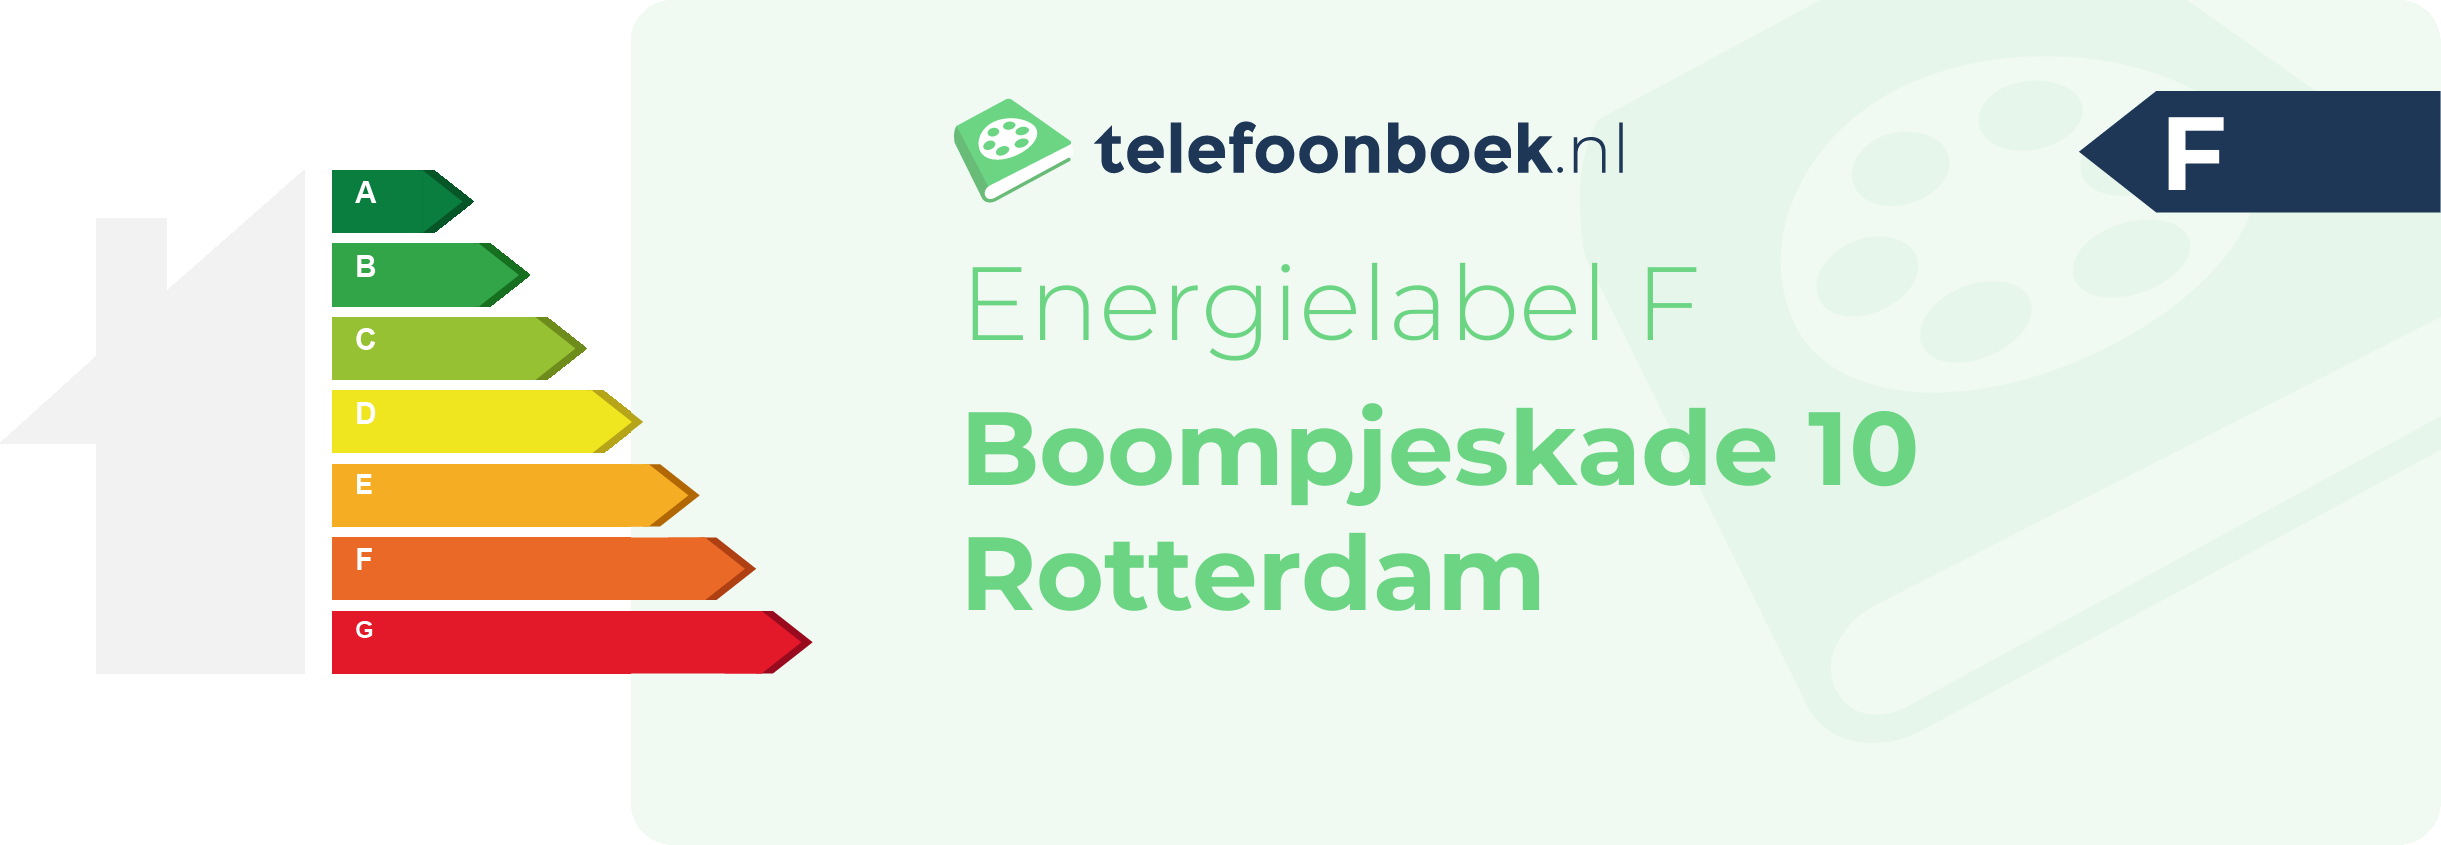 Energielabel Boompjeskade 10 Rotterdam